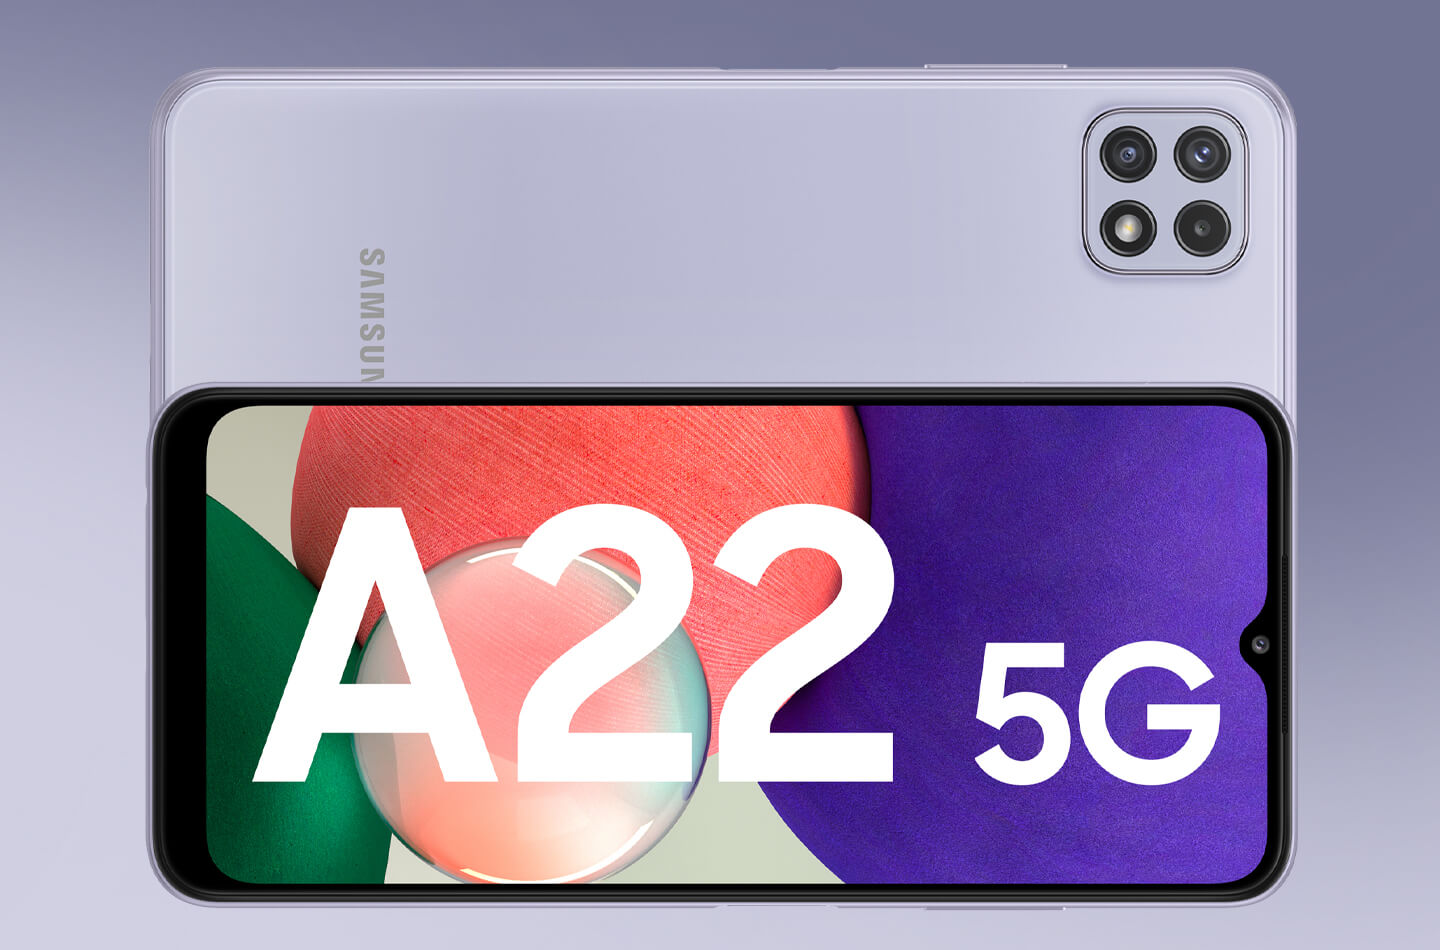 Samsung A22 5G a new model within the Galaxy A-Series – Archyworldys